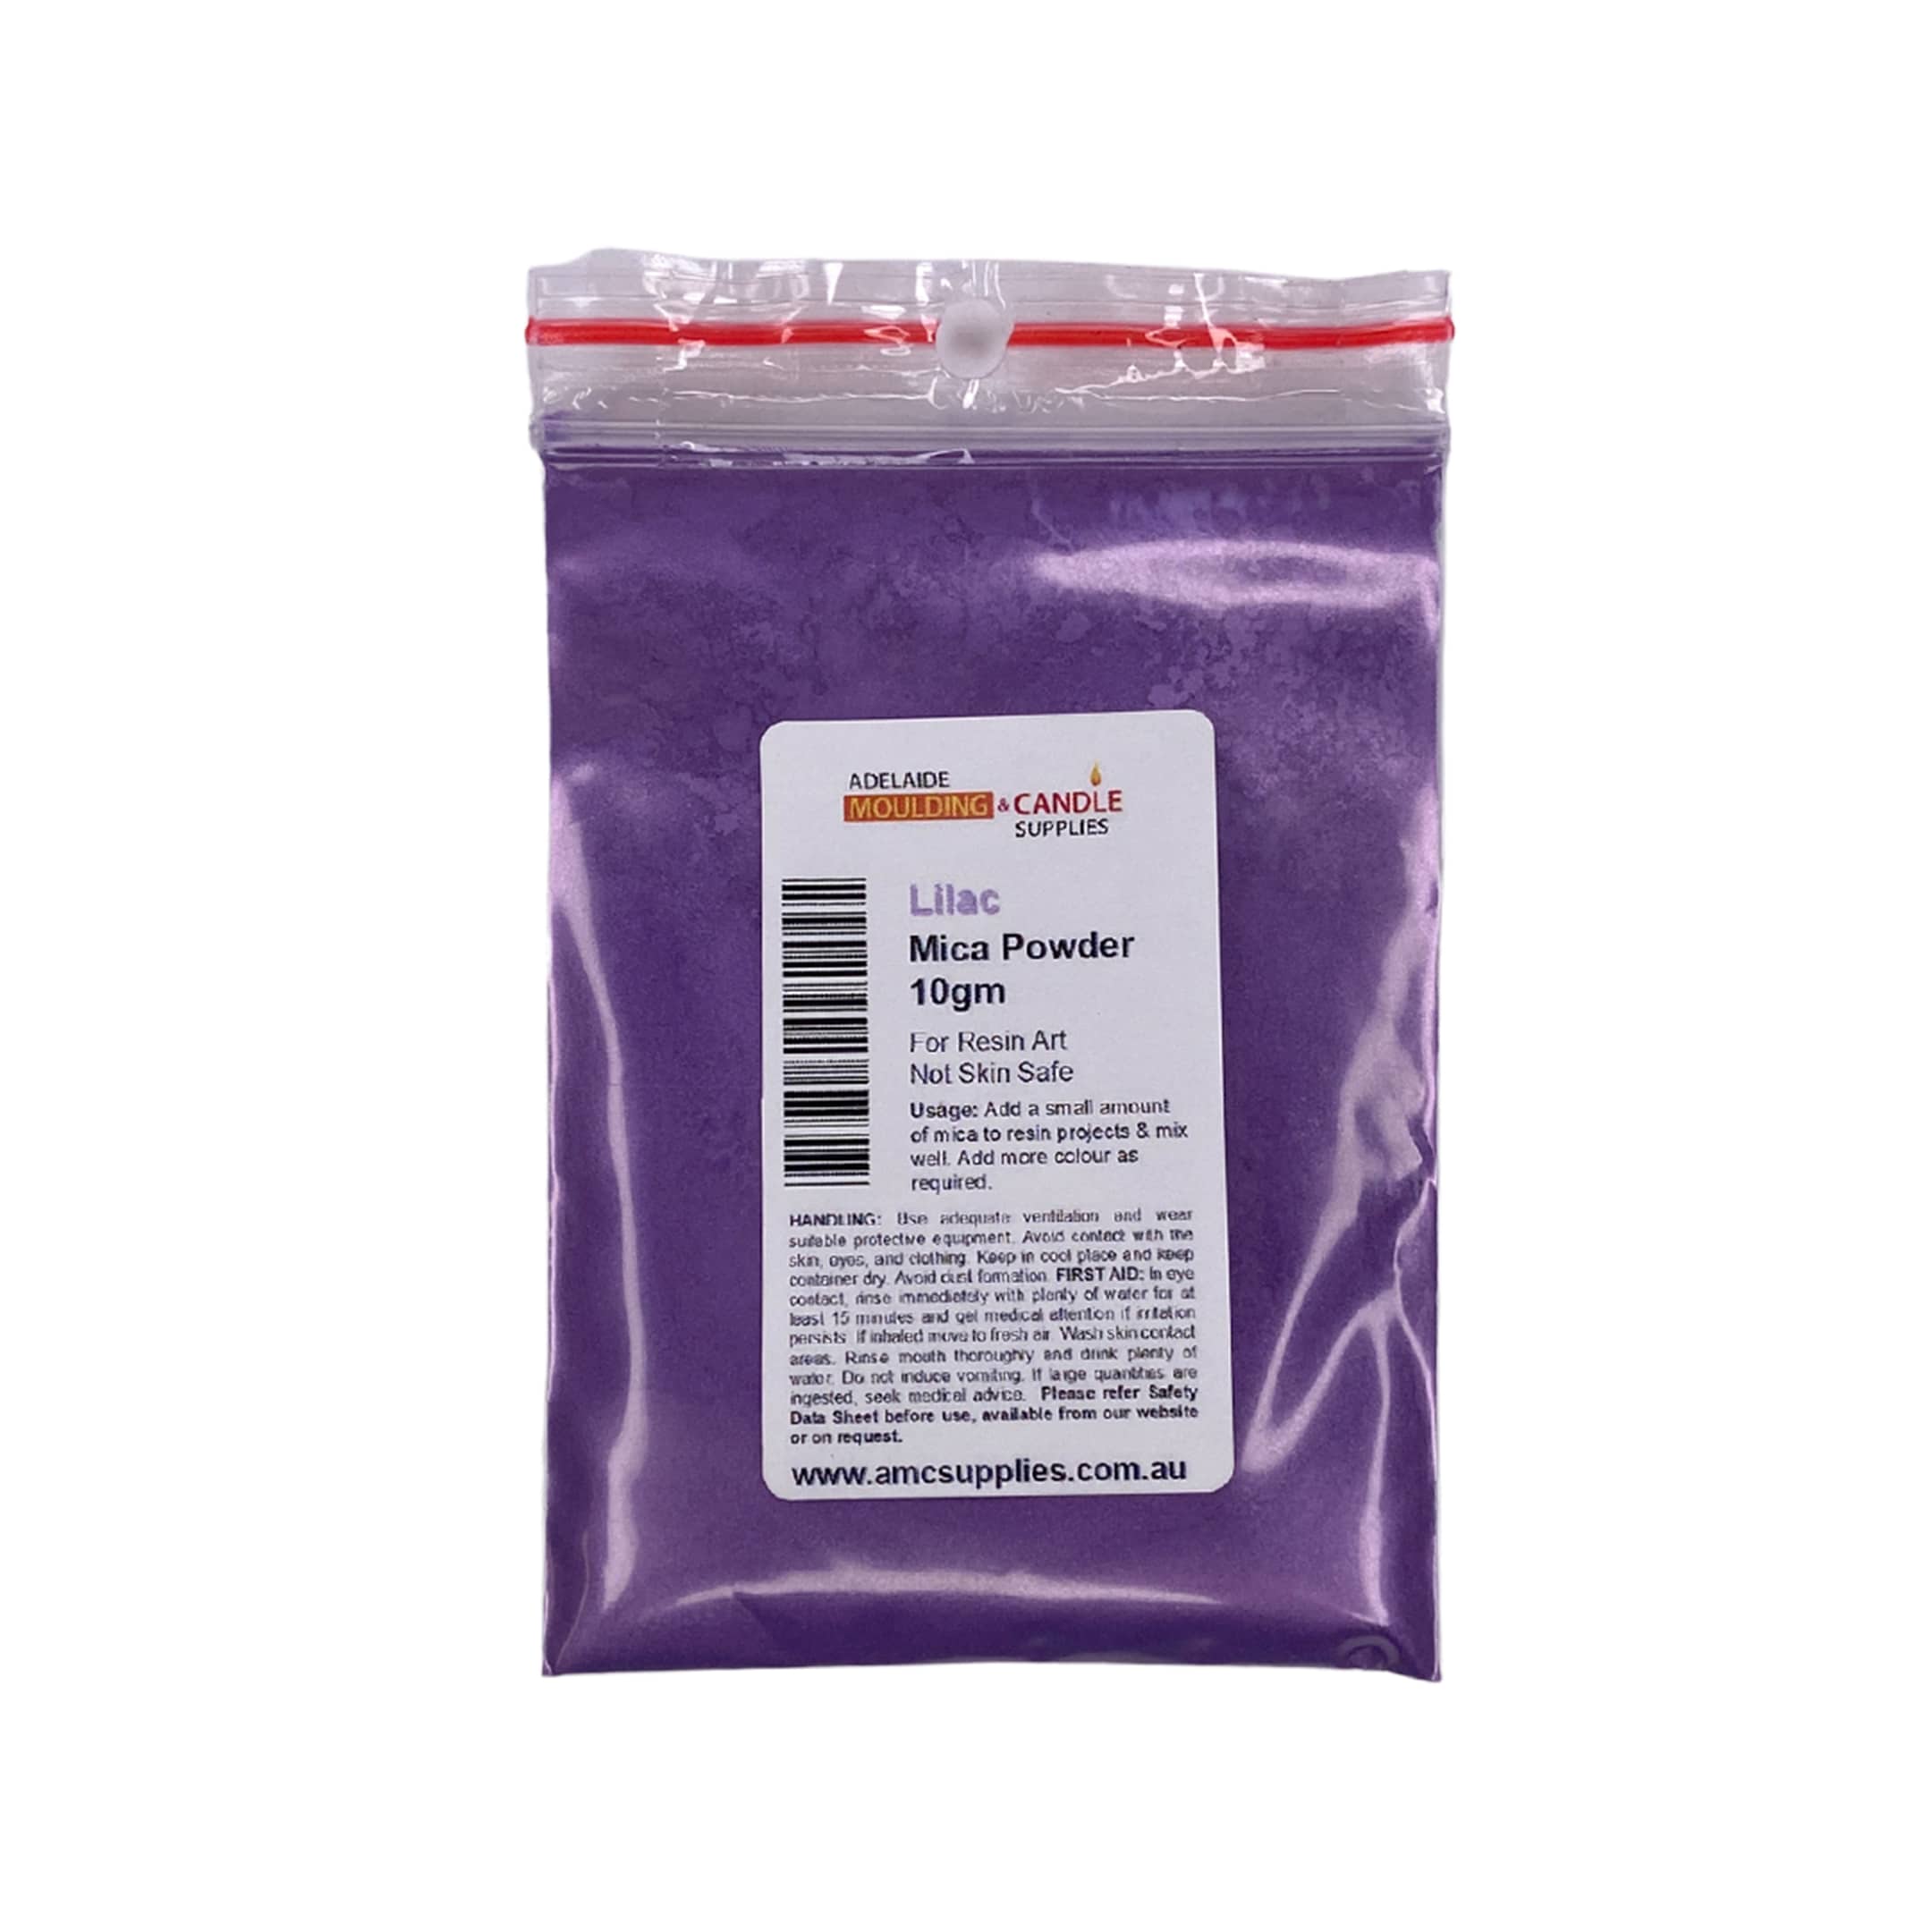 Lilac-resin-art-mica-powder-